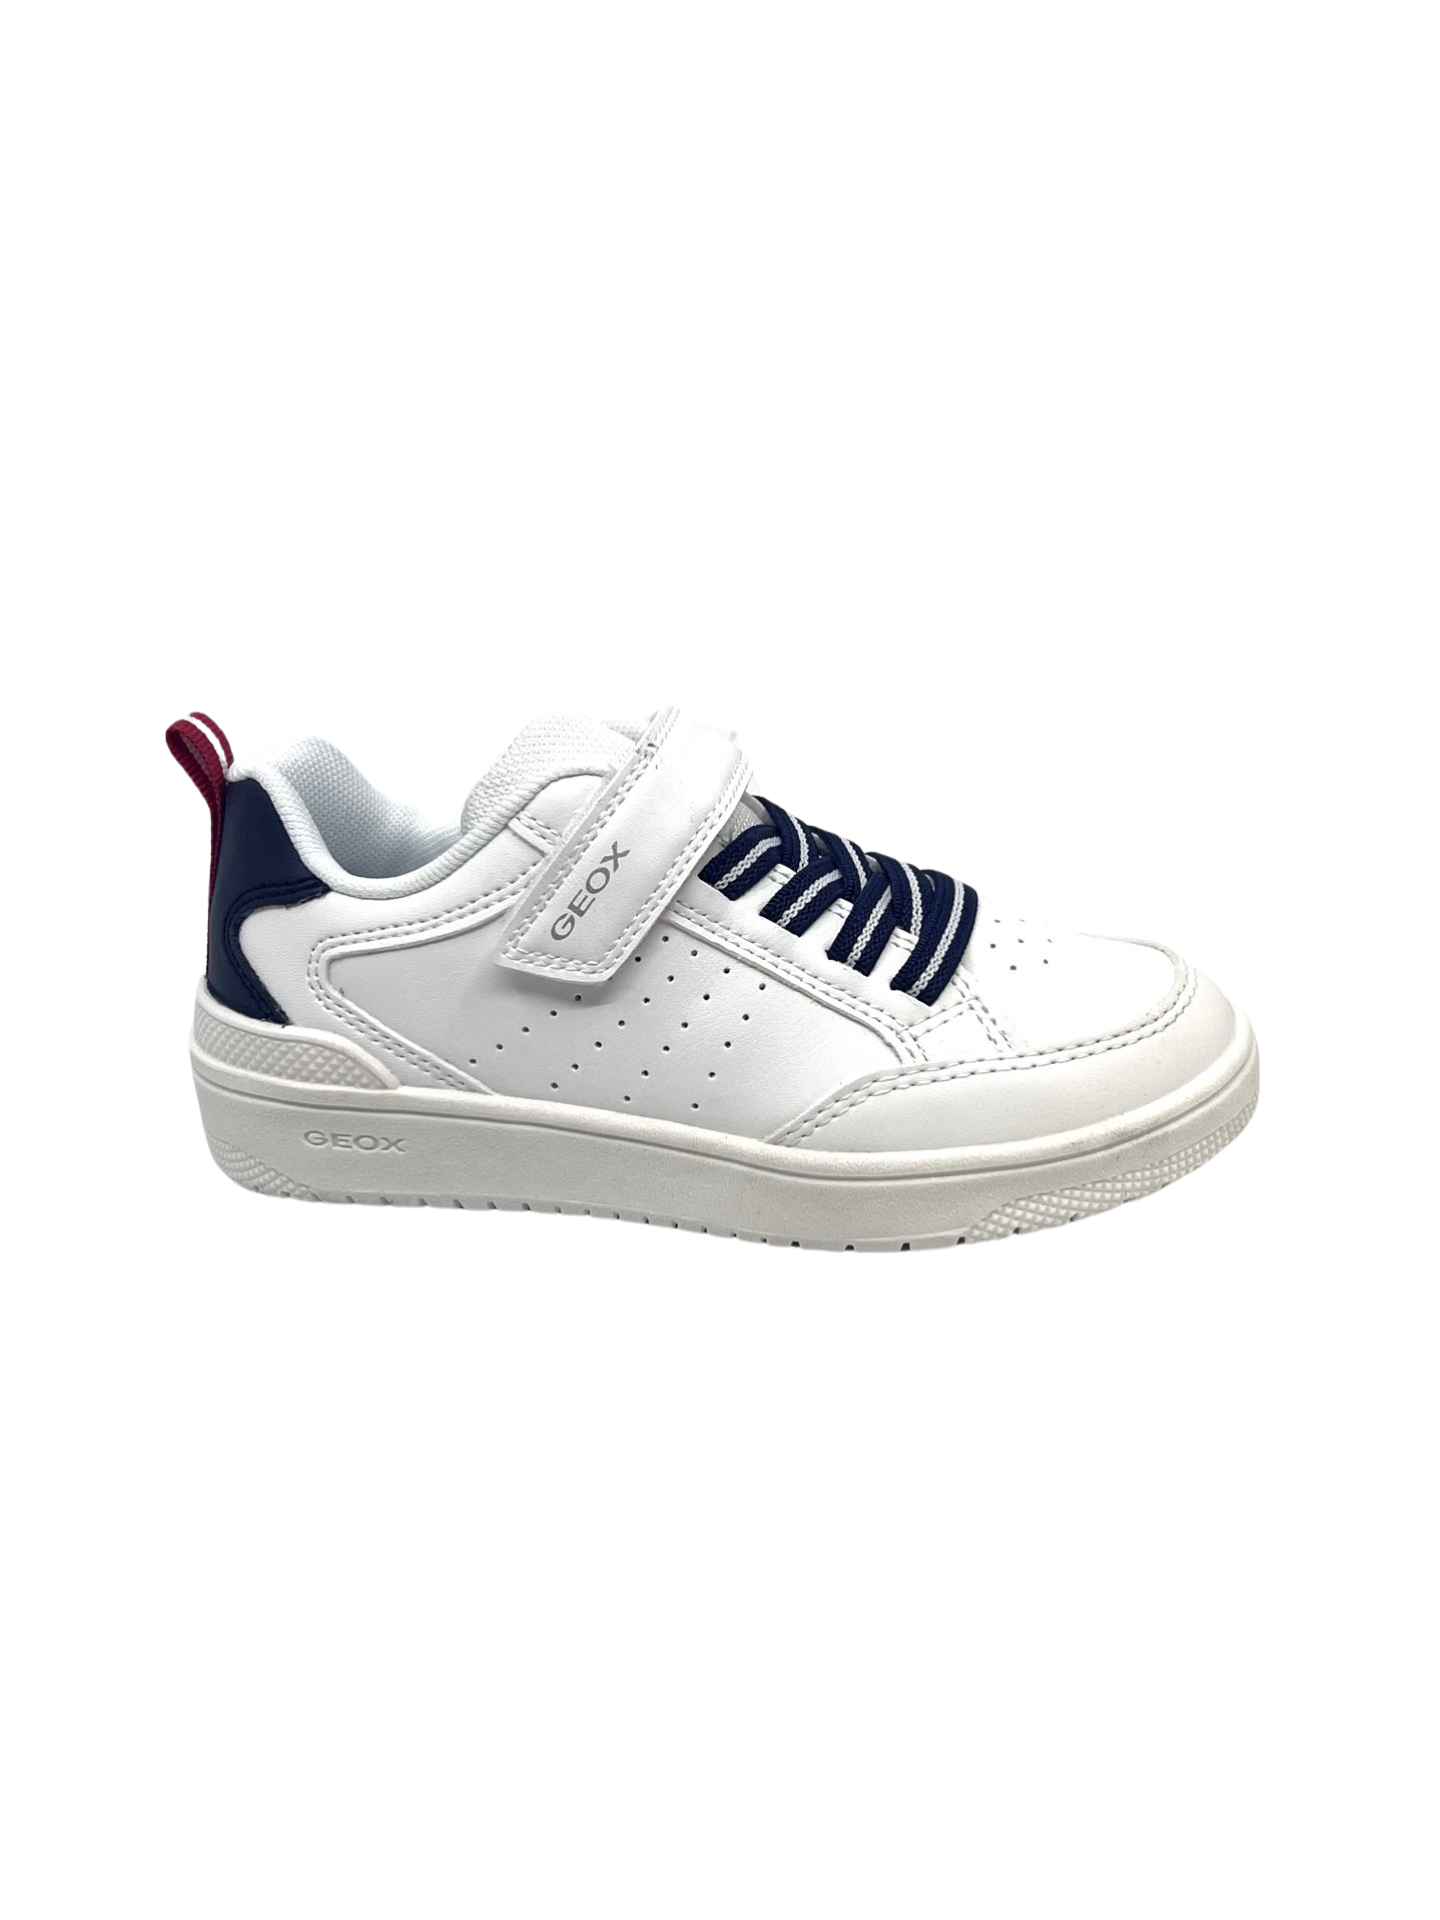 Geox White/Navy Velcro Sneaker